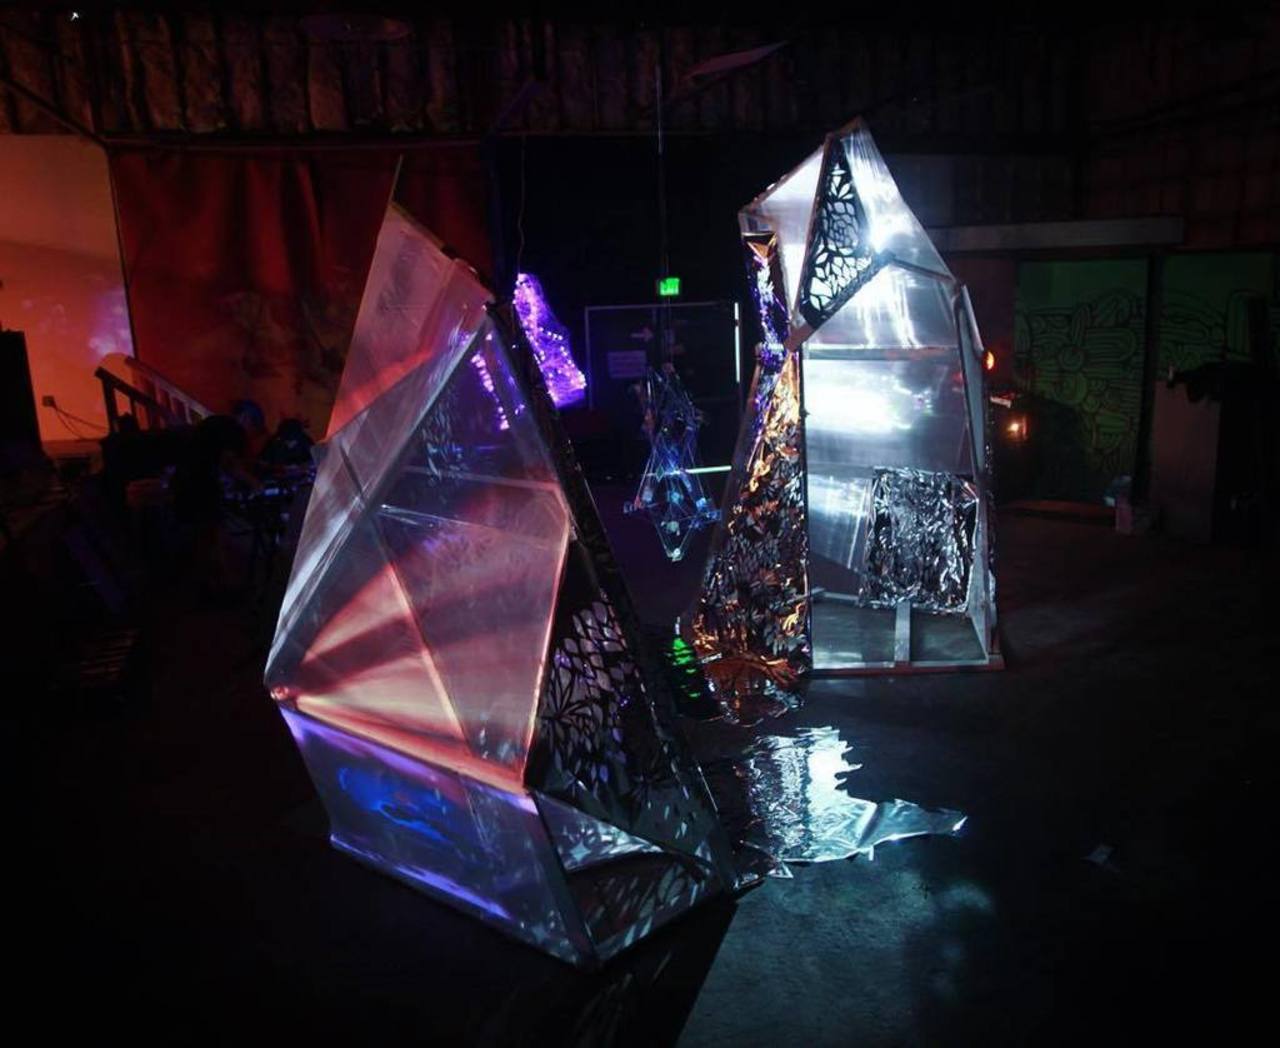 SENTINEL light sculpture in ATX July, 2014 #sculpture #lightart #installation #nycart #austinart #hologram #project… https://t.co/cpLxks1e1e